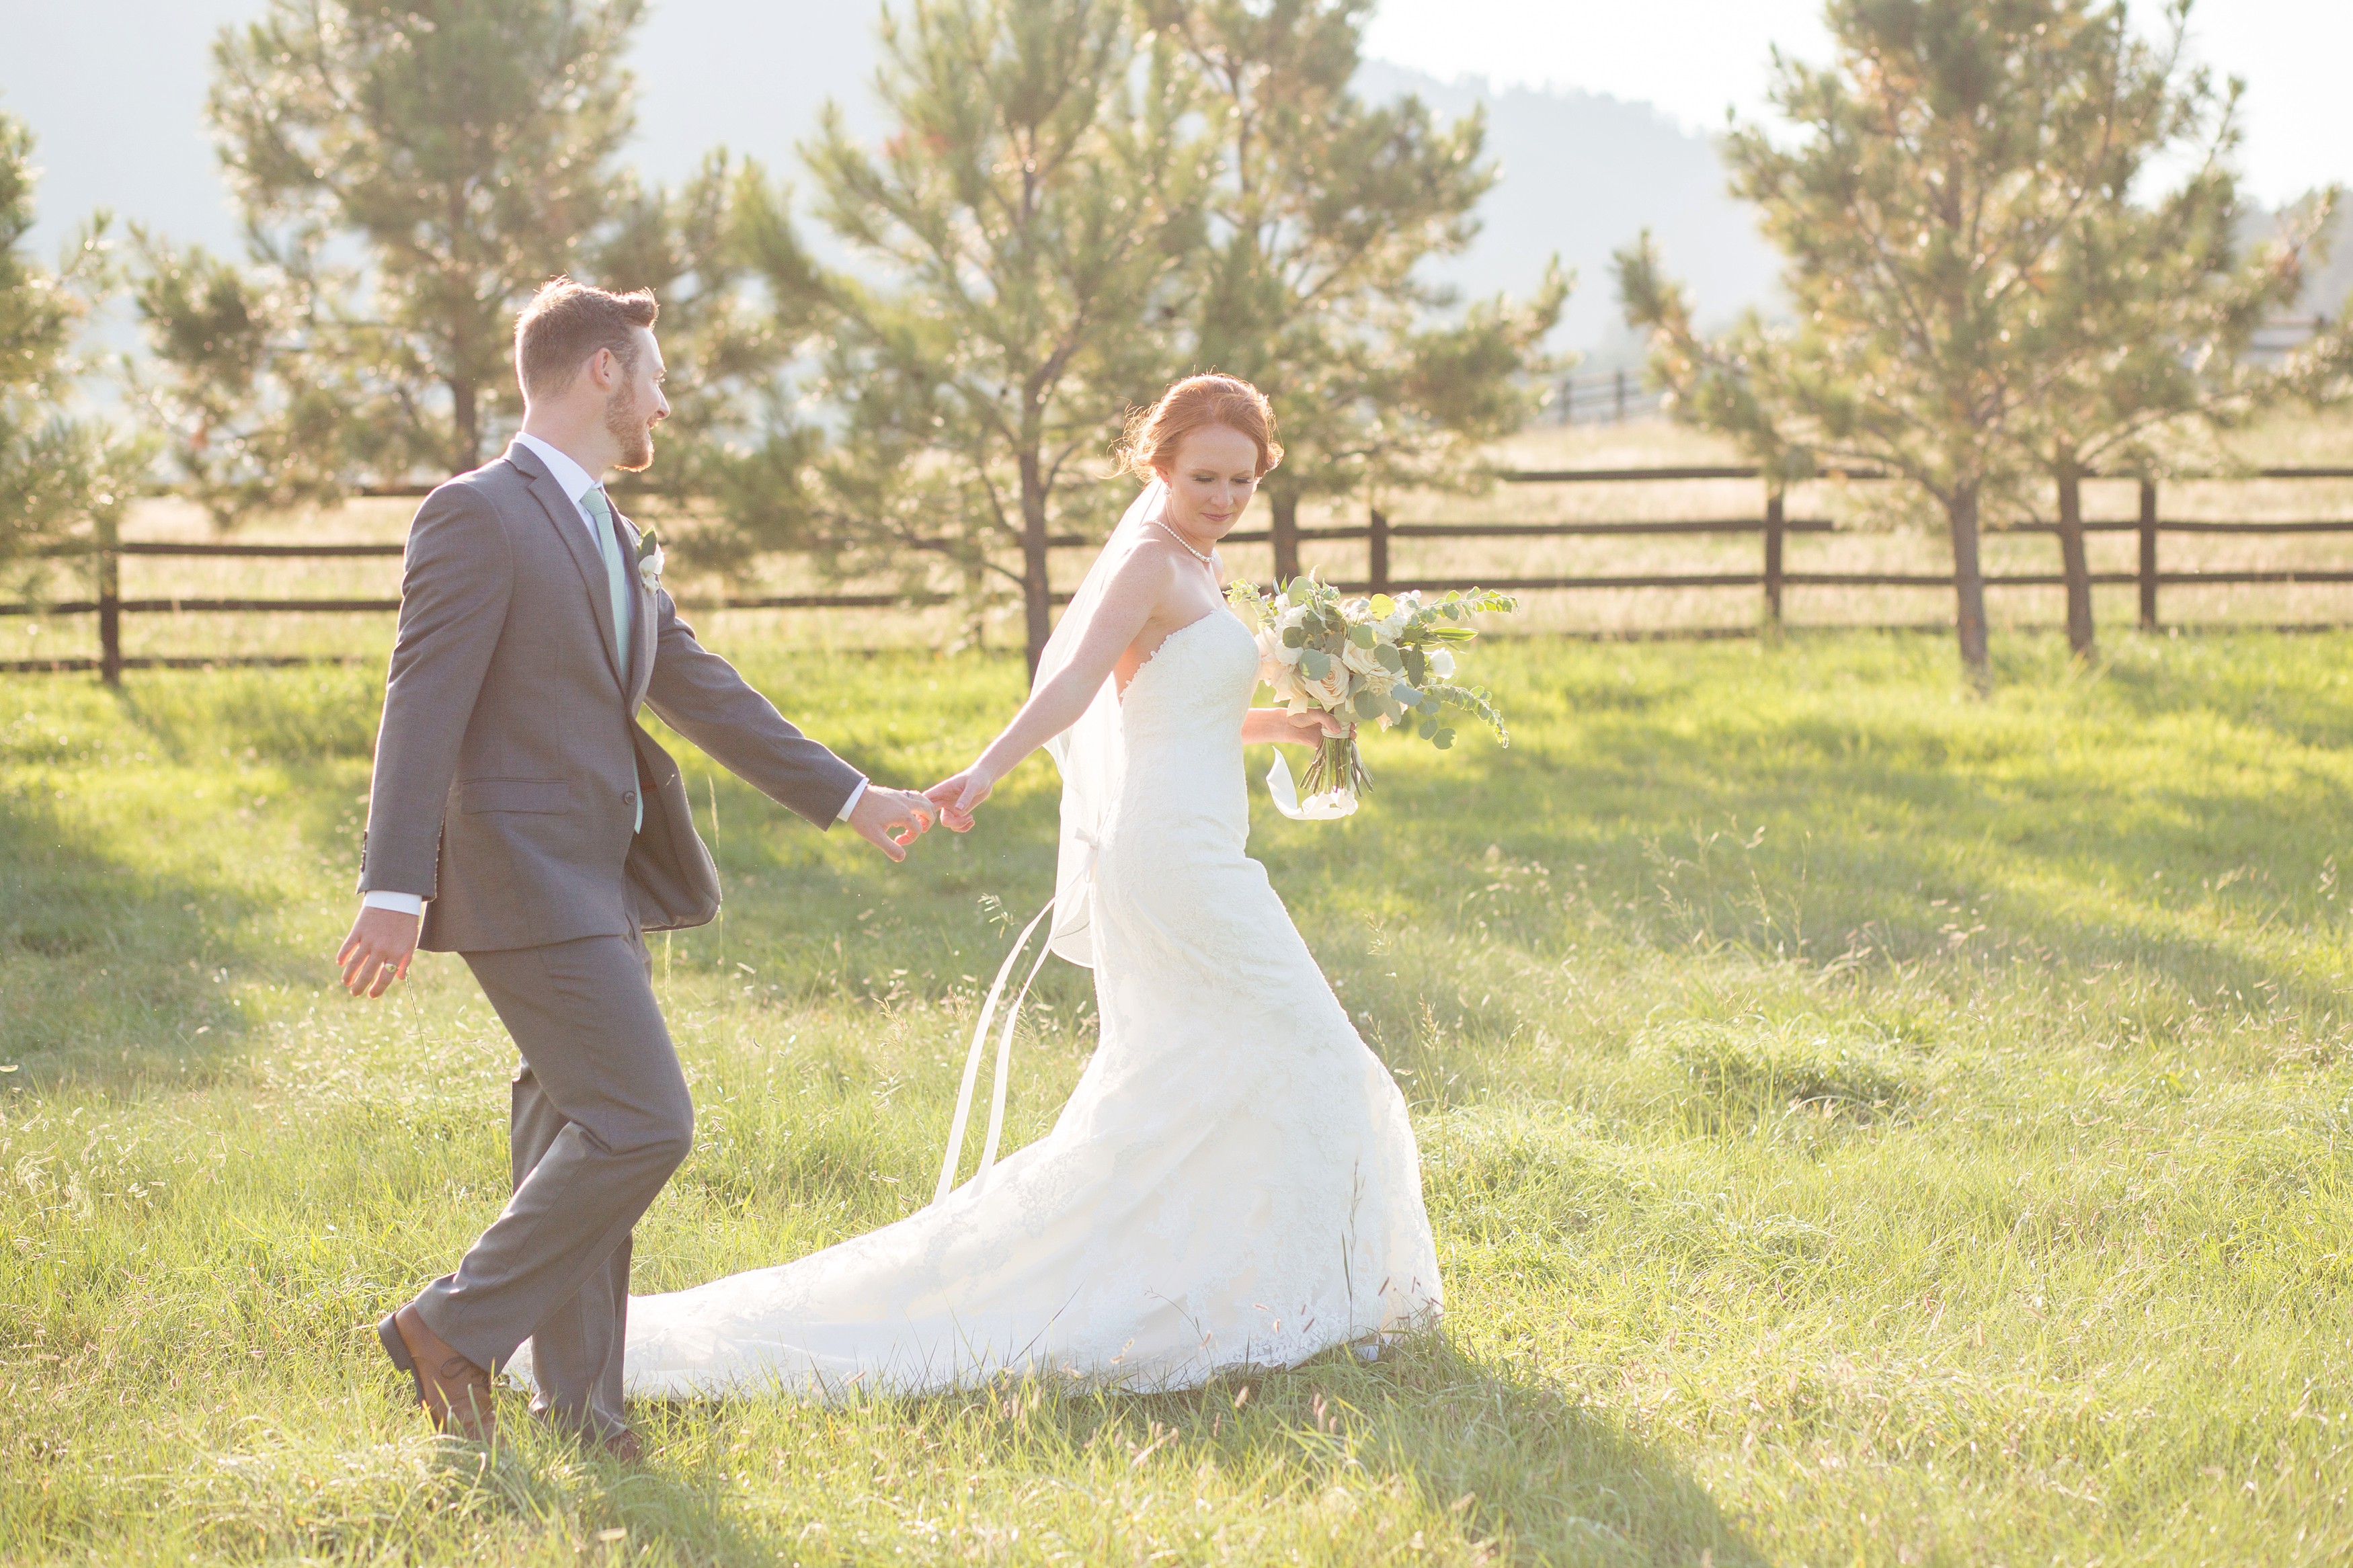 Spruce Mountain Ranch Weddings | Jamie Beth Photography